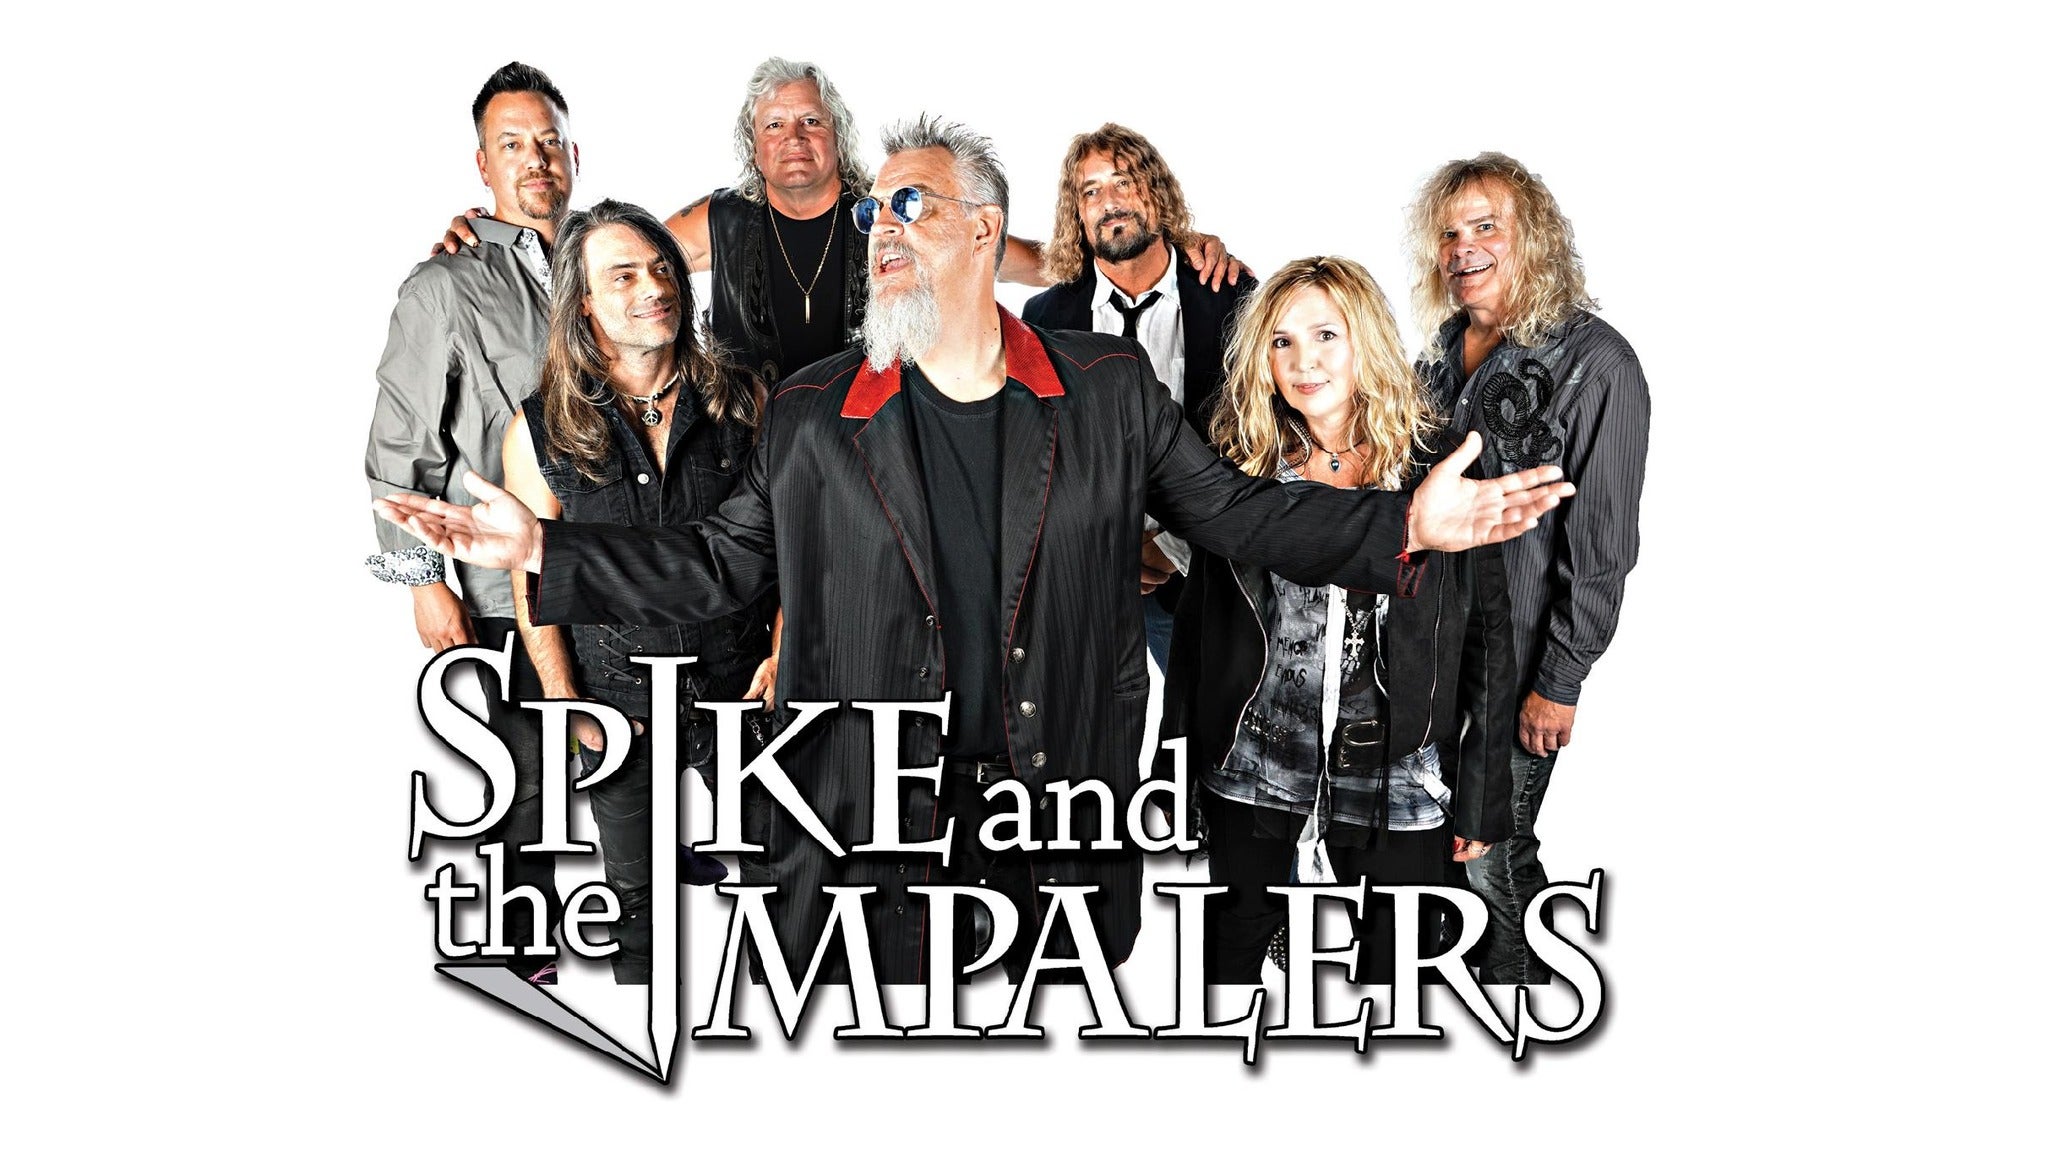 Spike and the Impalers presale information on freepresalepasswords.com